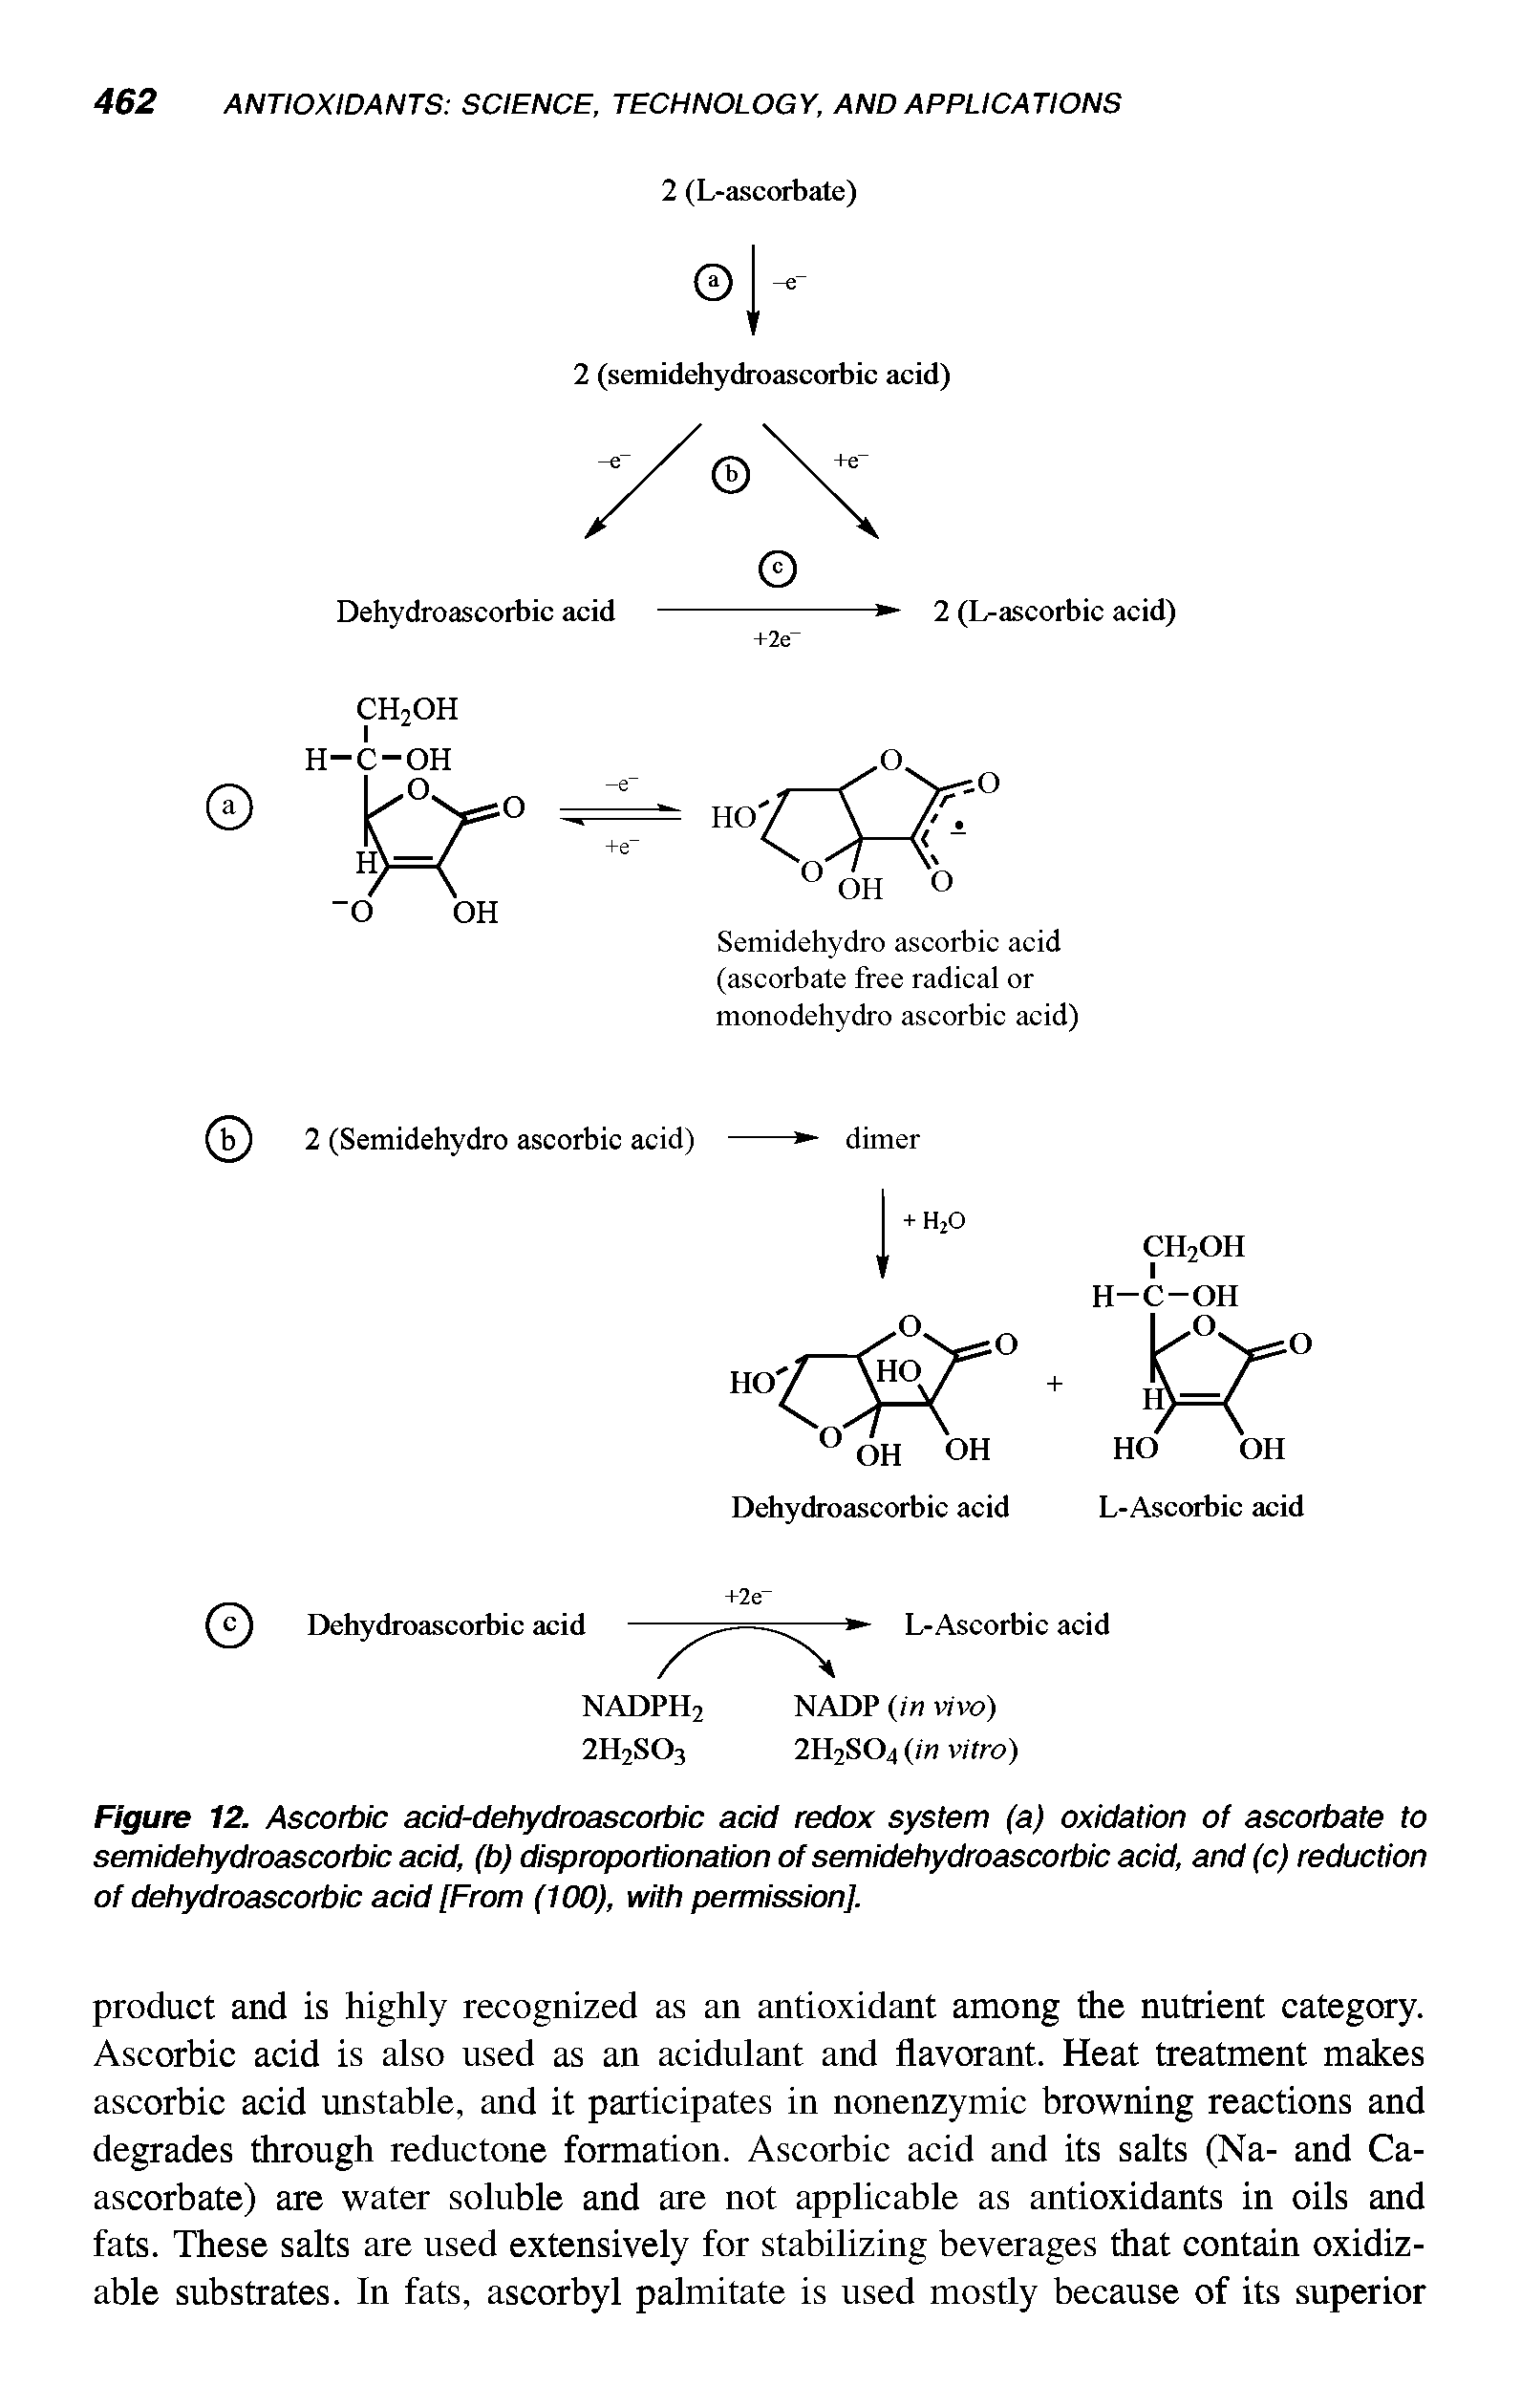 Figure 12. Ascorbic acid-dehydroascorbic acid redox system (a) oxidation of ascorbate to semidehydroascorbic acid, (b) disproportionation of semidehydroascorbic acid, and (c) reduction of dehydroascorbic acid [From (100), with permission].